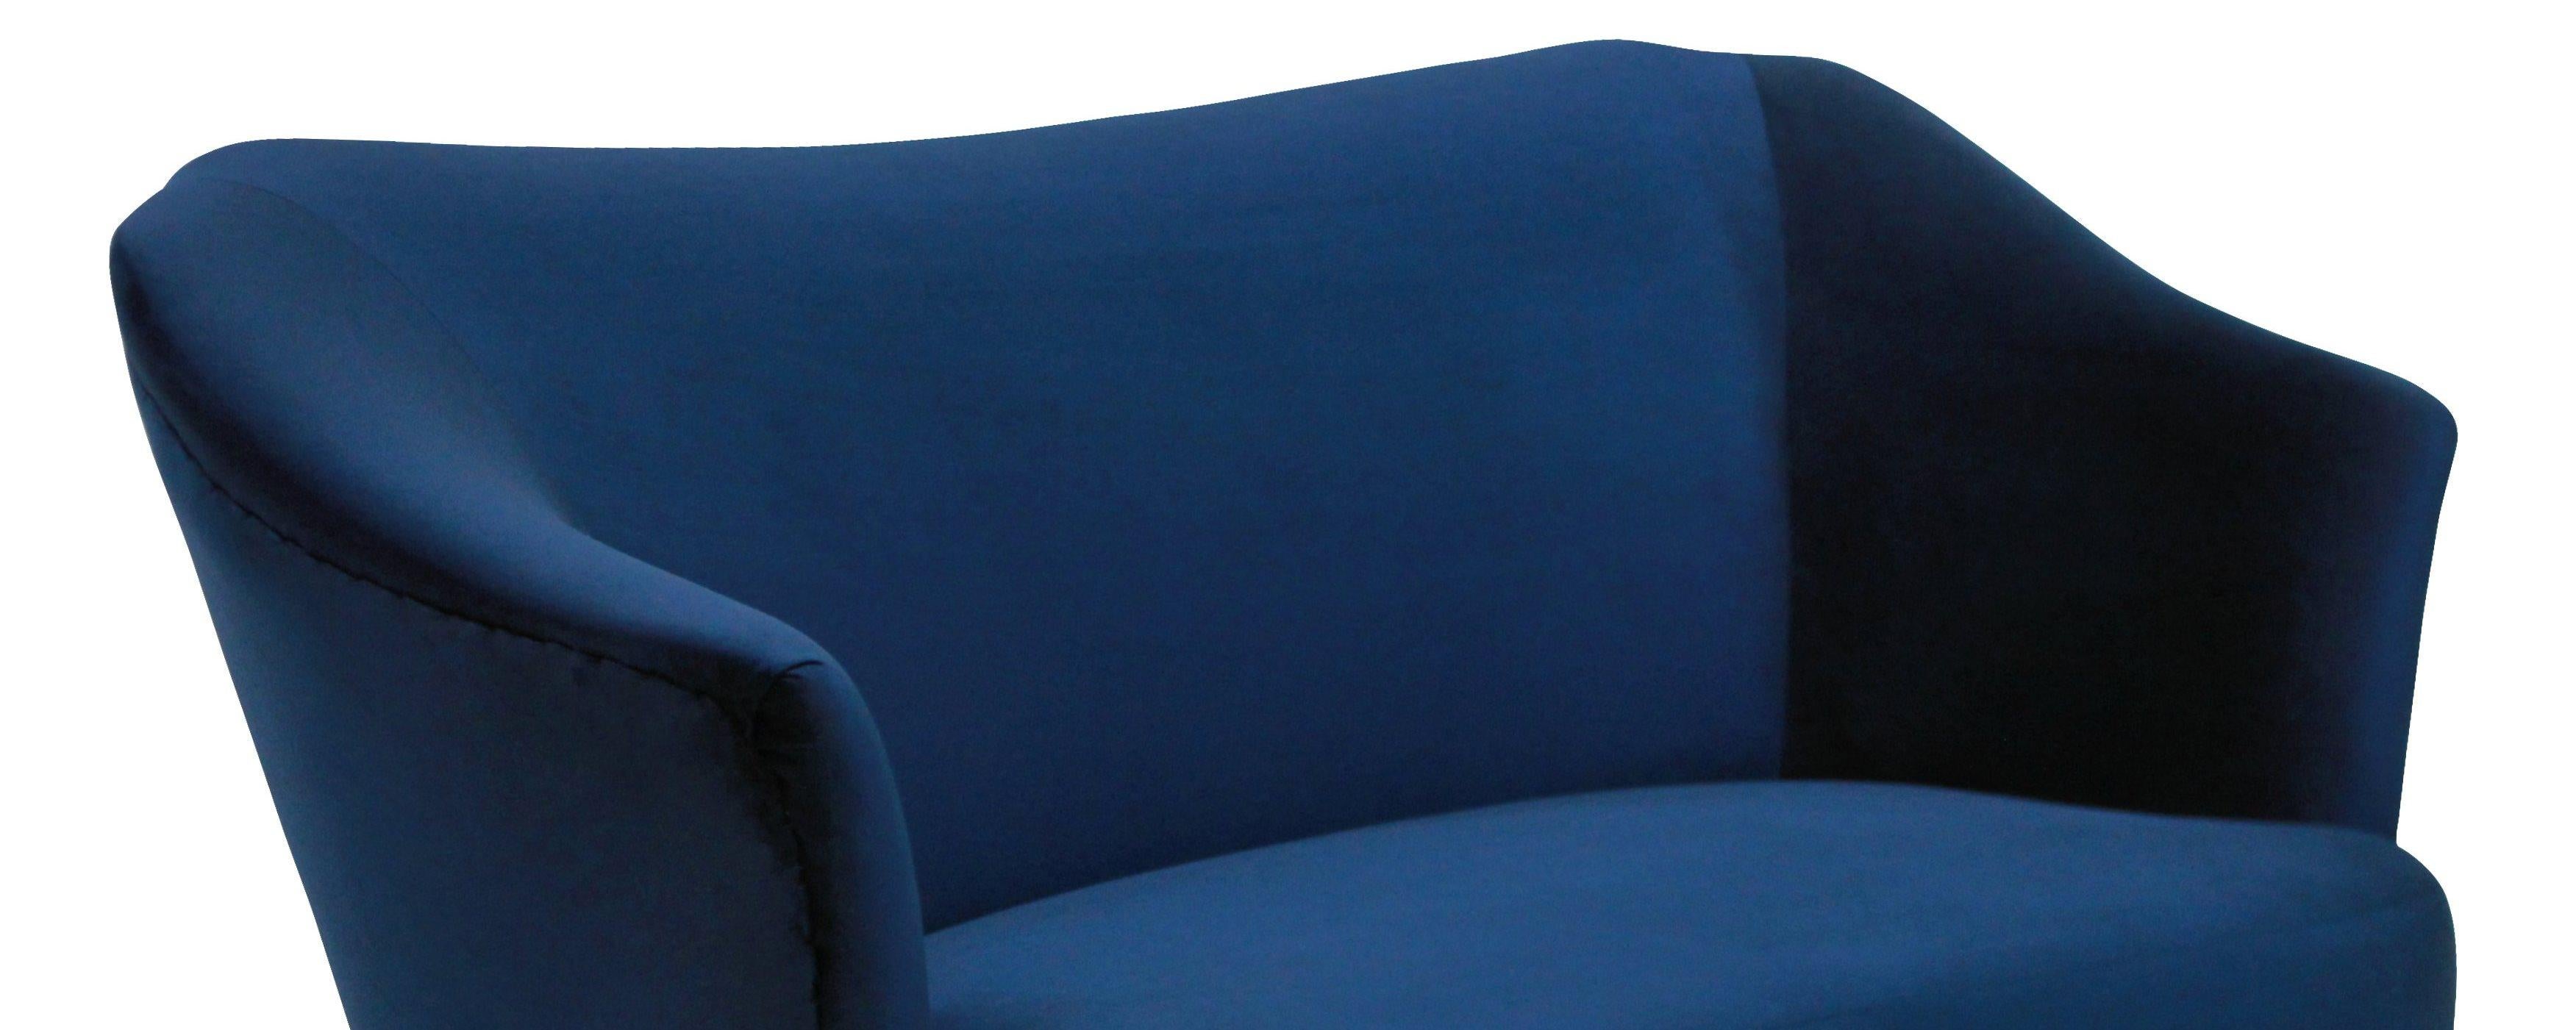 Mid-Century Modern Sculptural Sofa by ISA in Blue Velvet